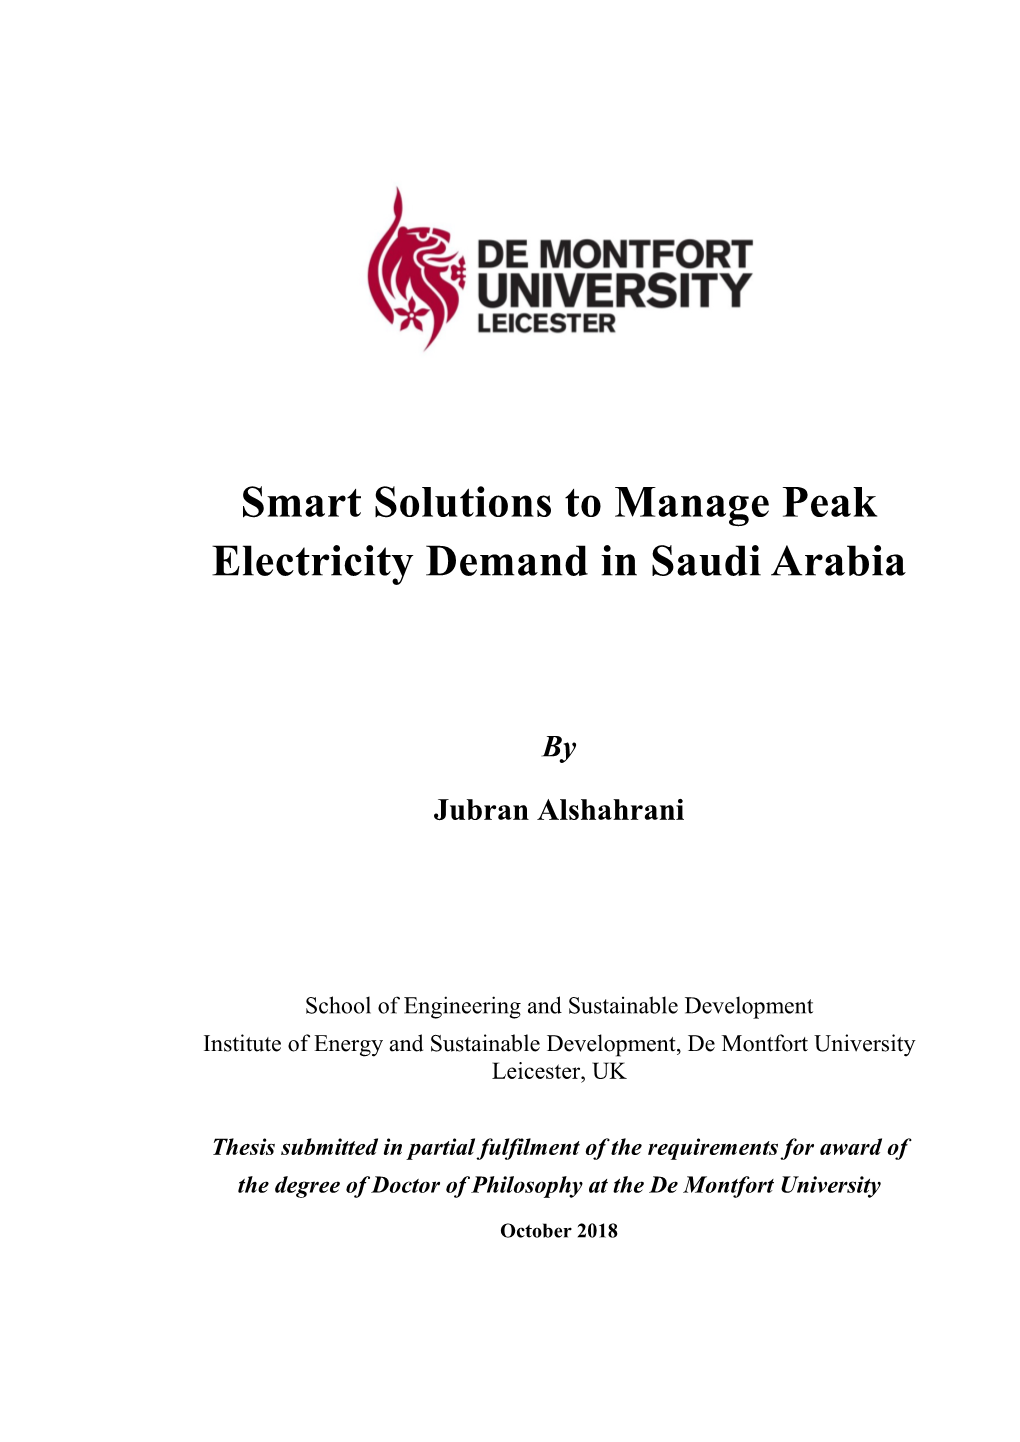 Smart Solutions to Manage Peak Electricity Demand in Saudi Arabia